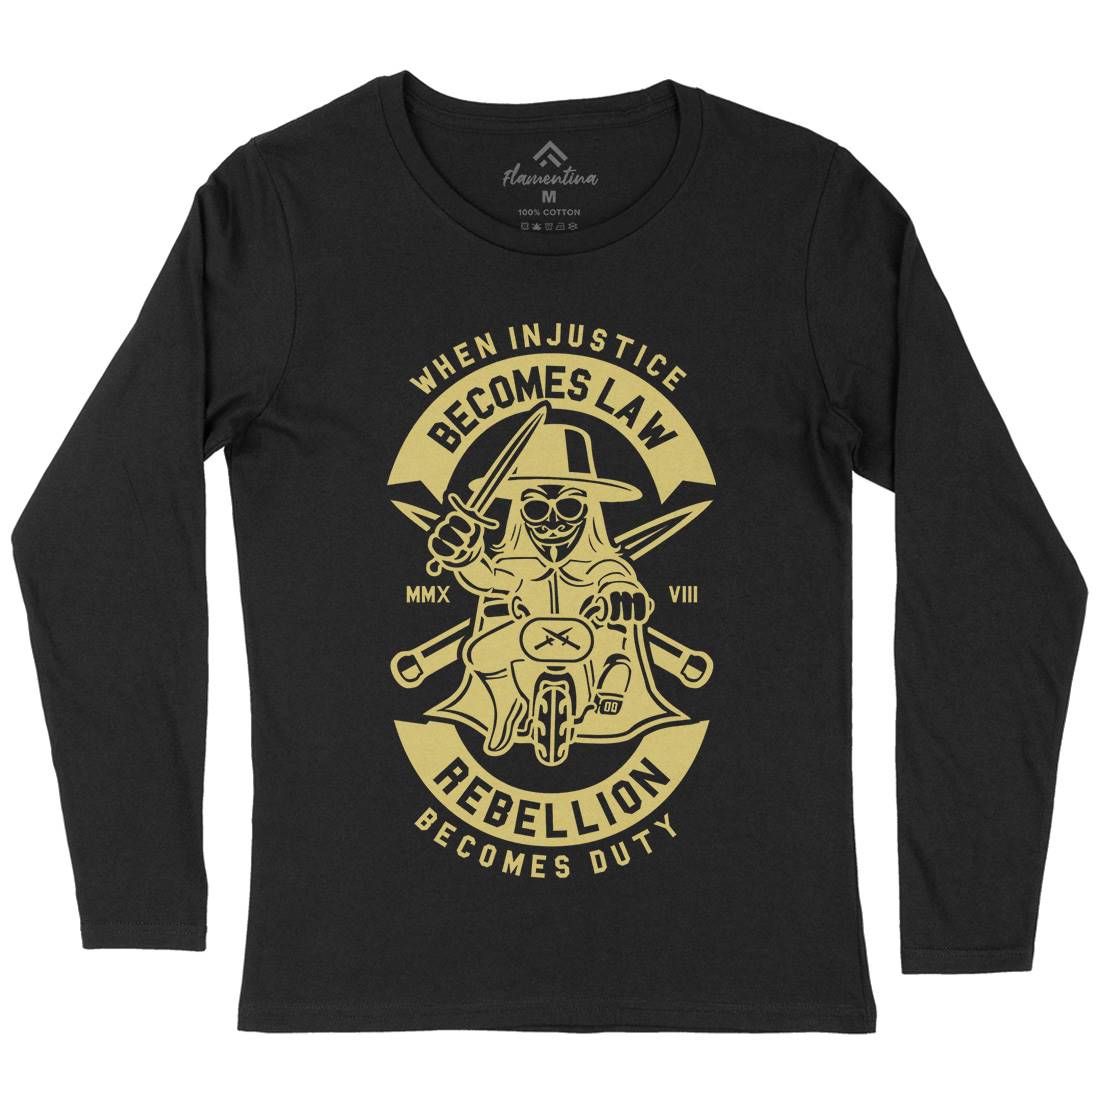 Rebellion Womens Long Sleeve T-Shirt Illuminati A267